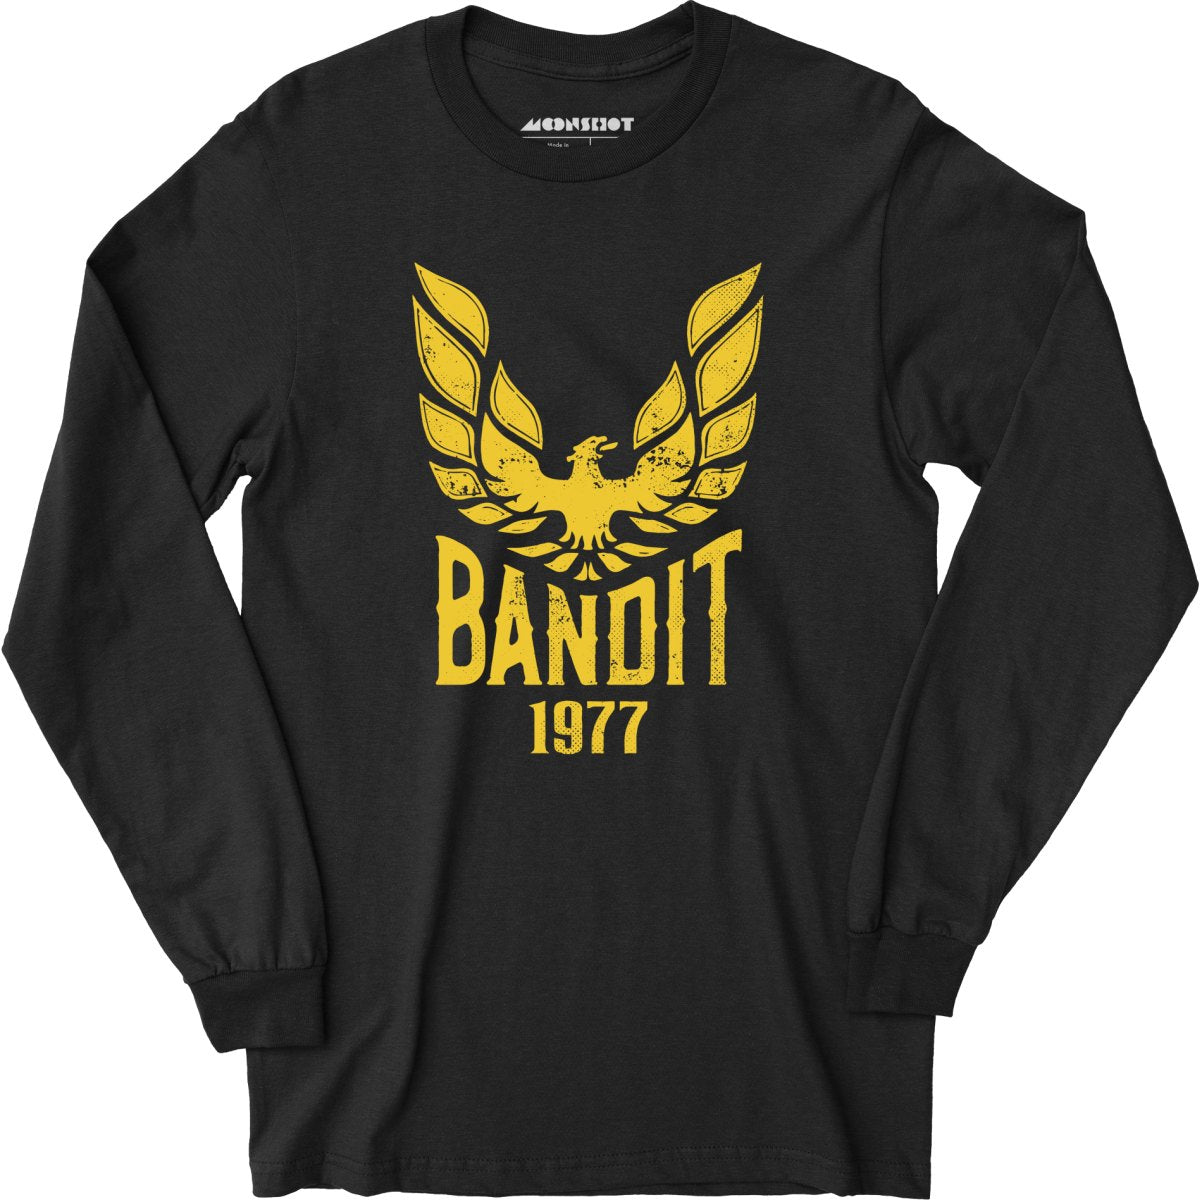 Bandit 1977 - Long Sleeve T-Shirt